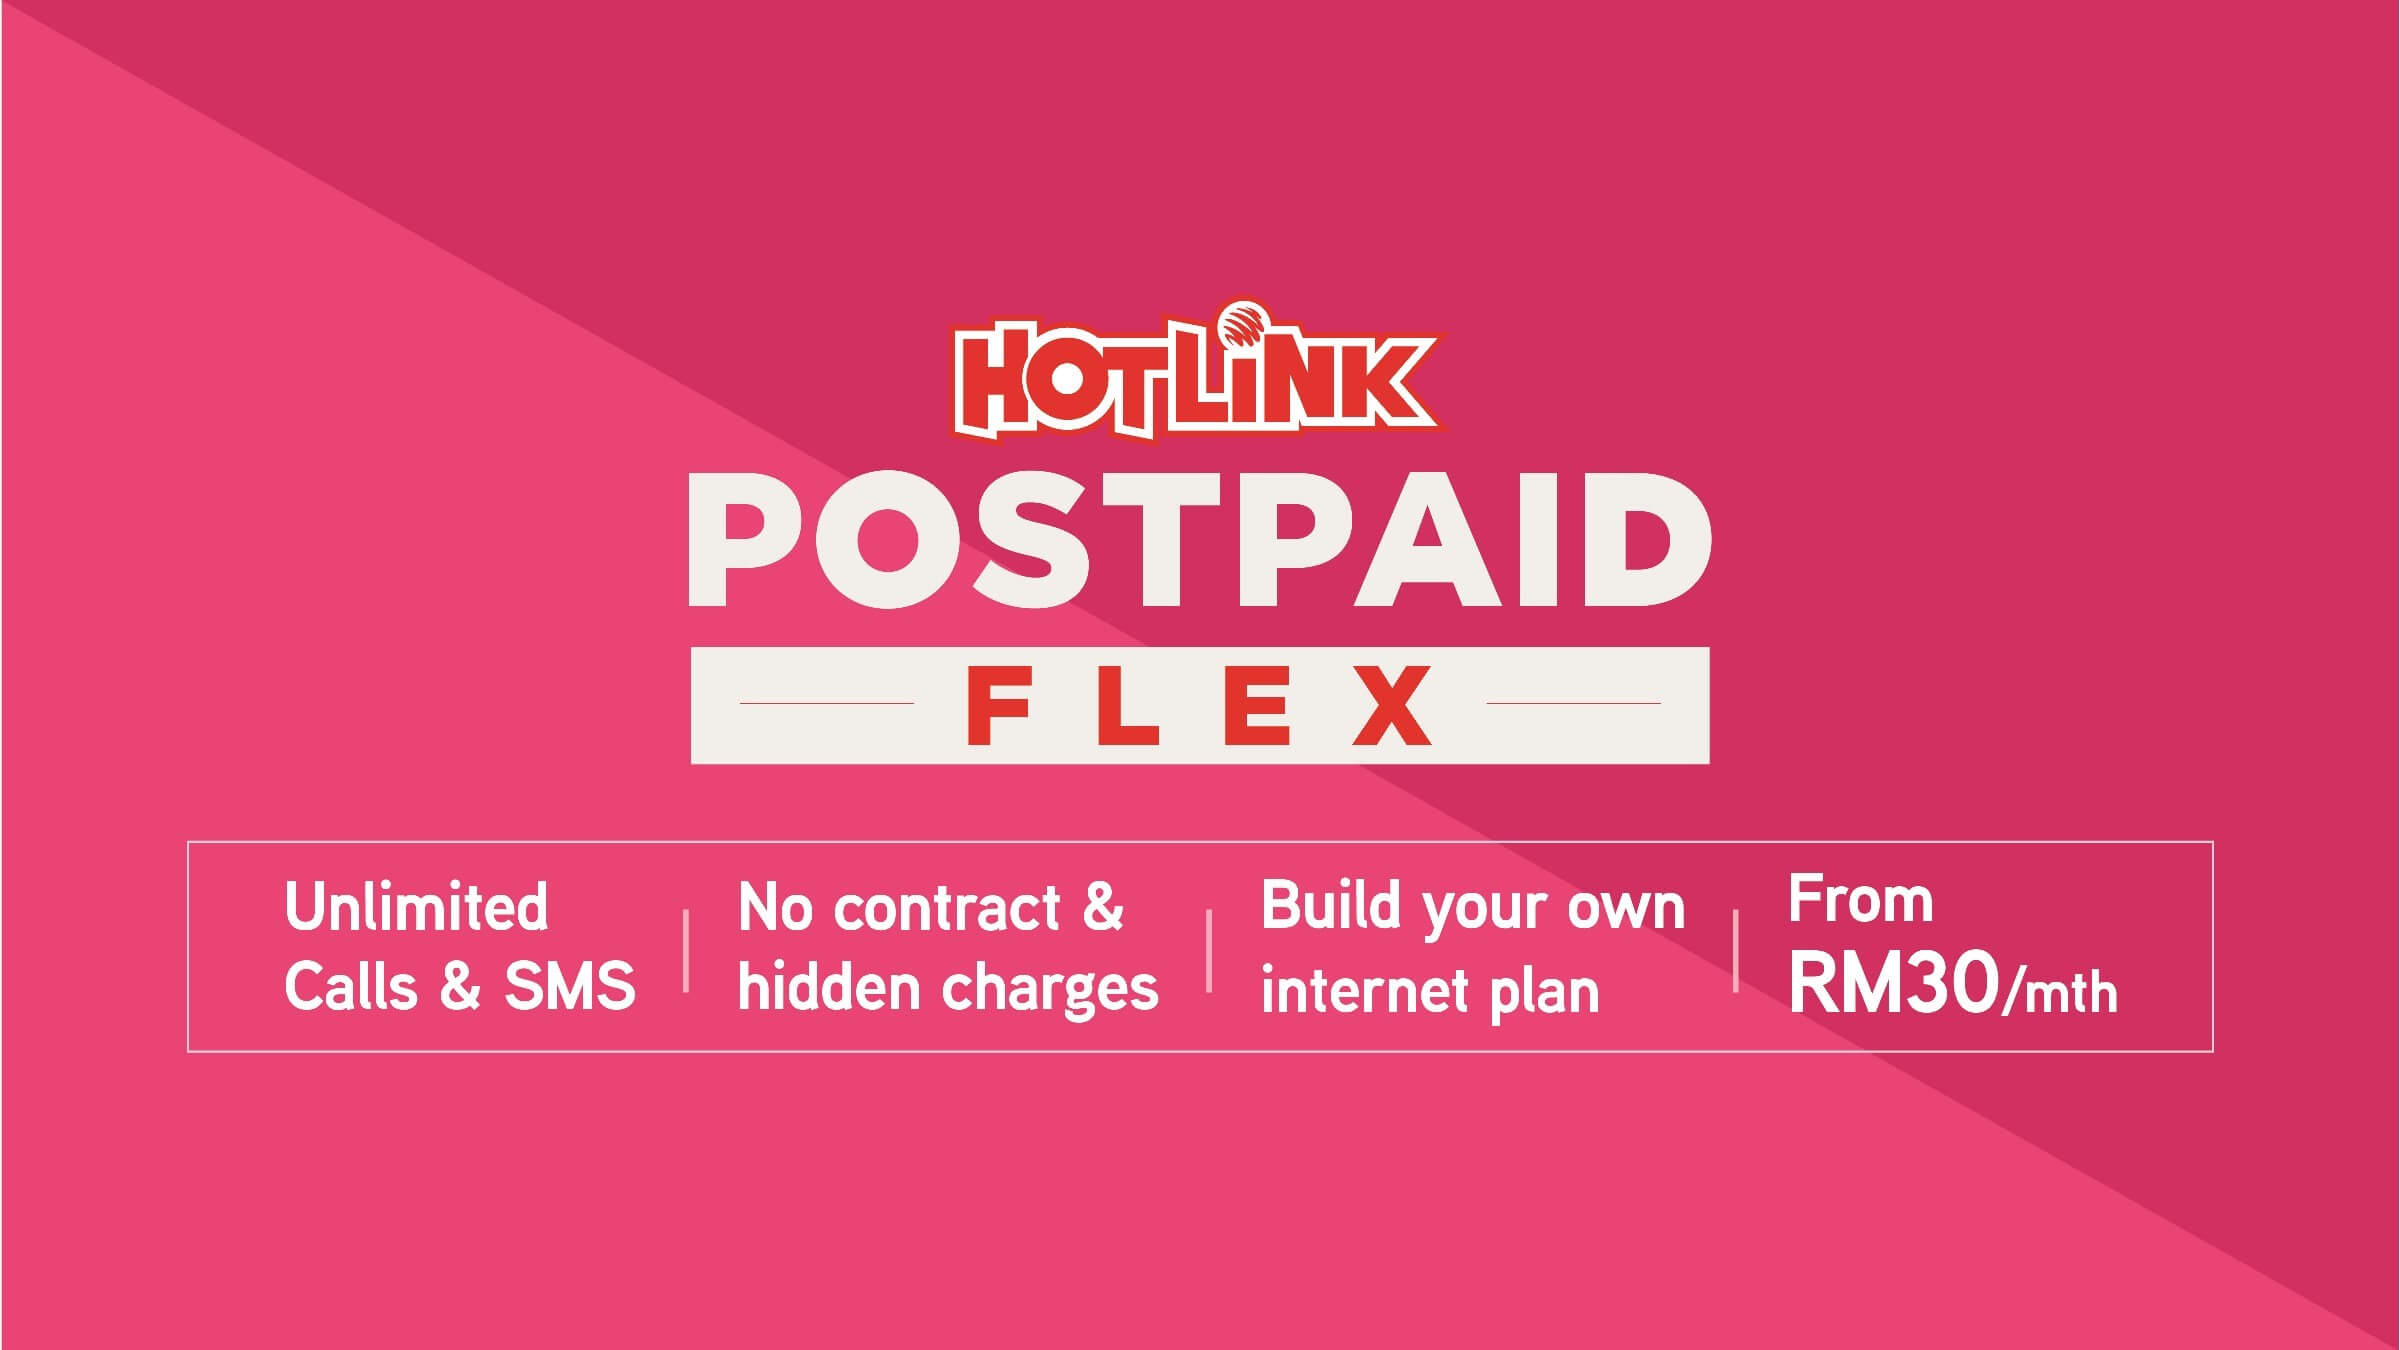 Postpaid flex hotlink